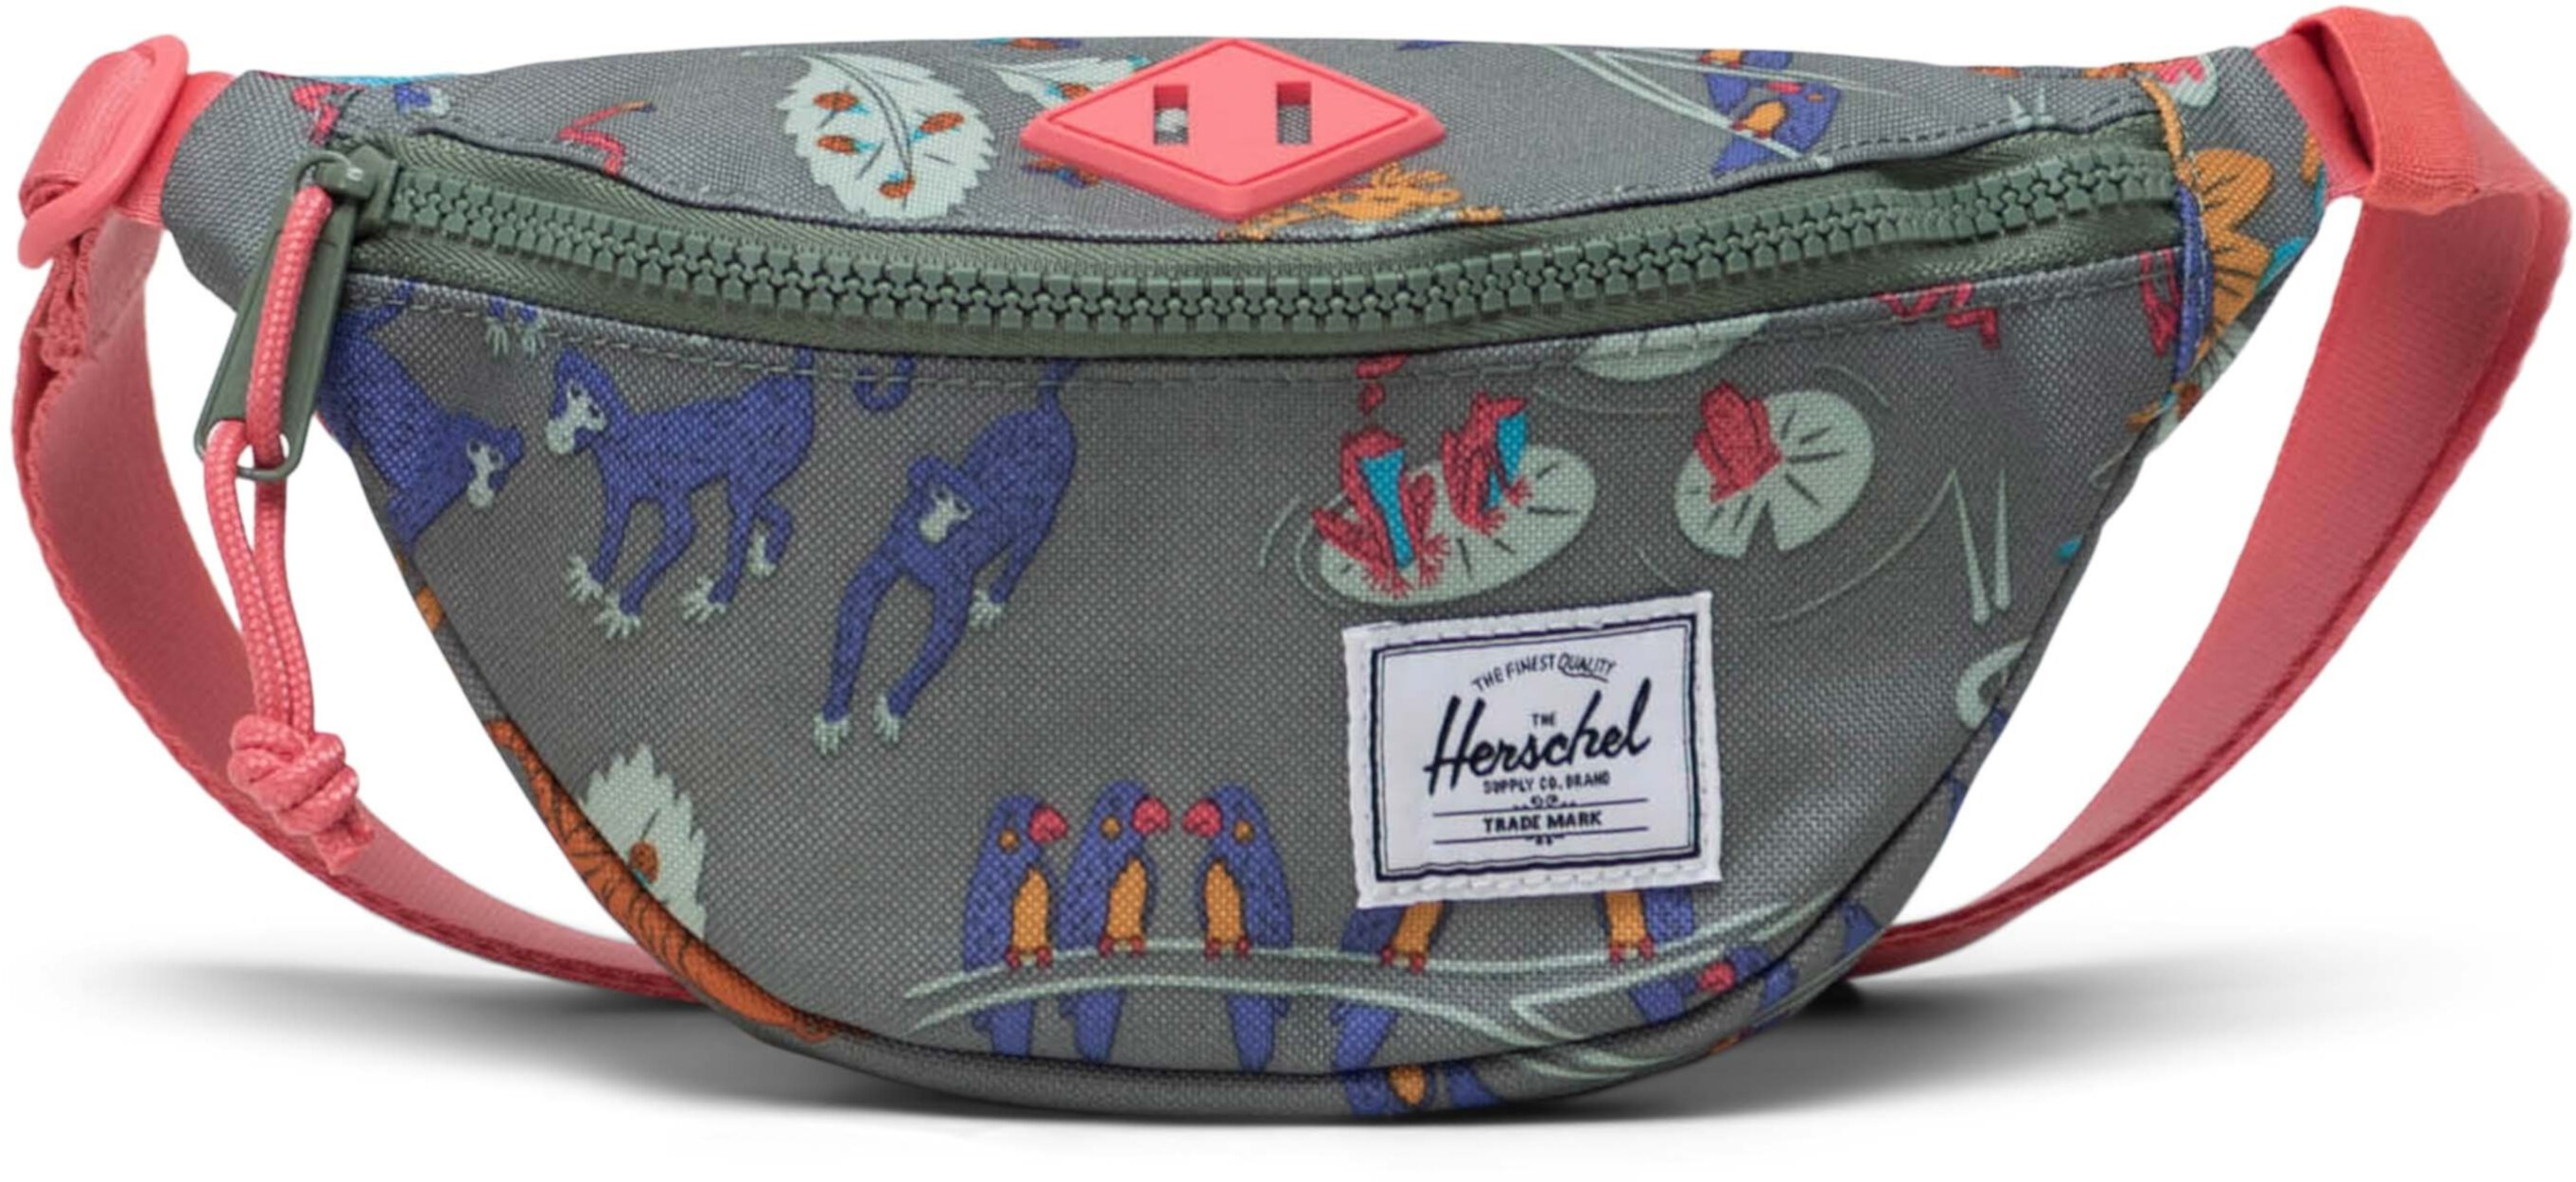 Поясная сумка Heritage™ Herschel